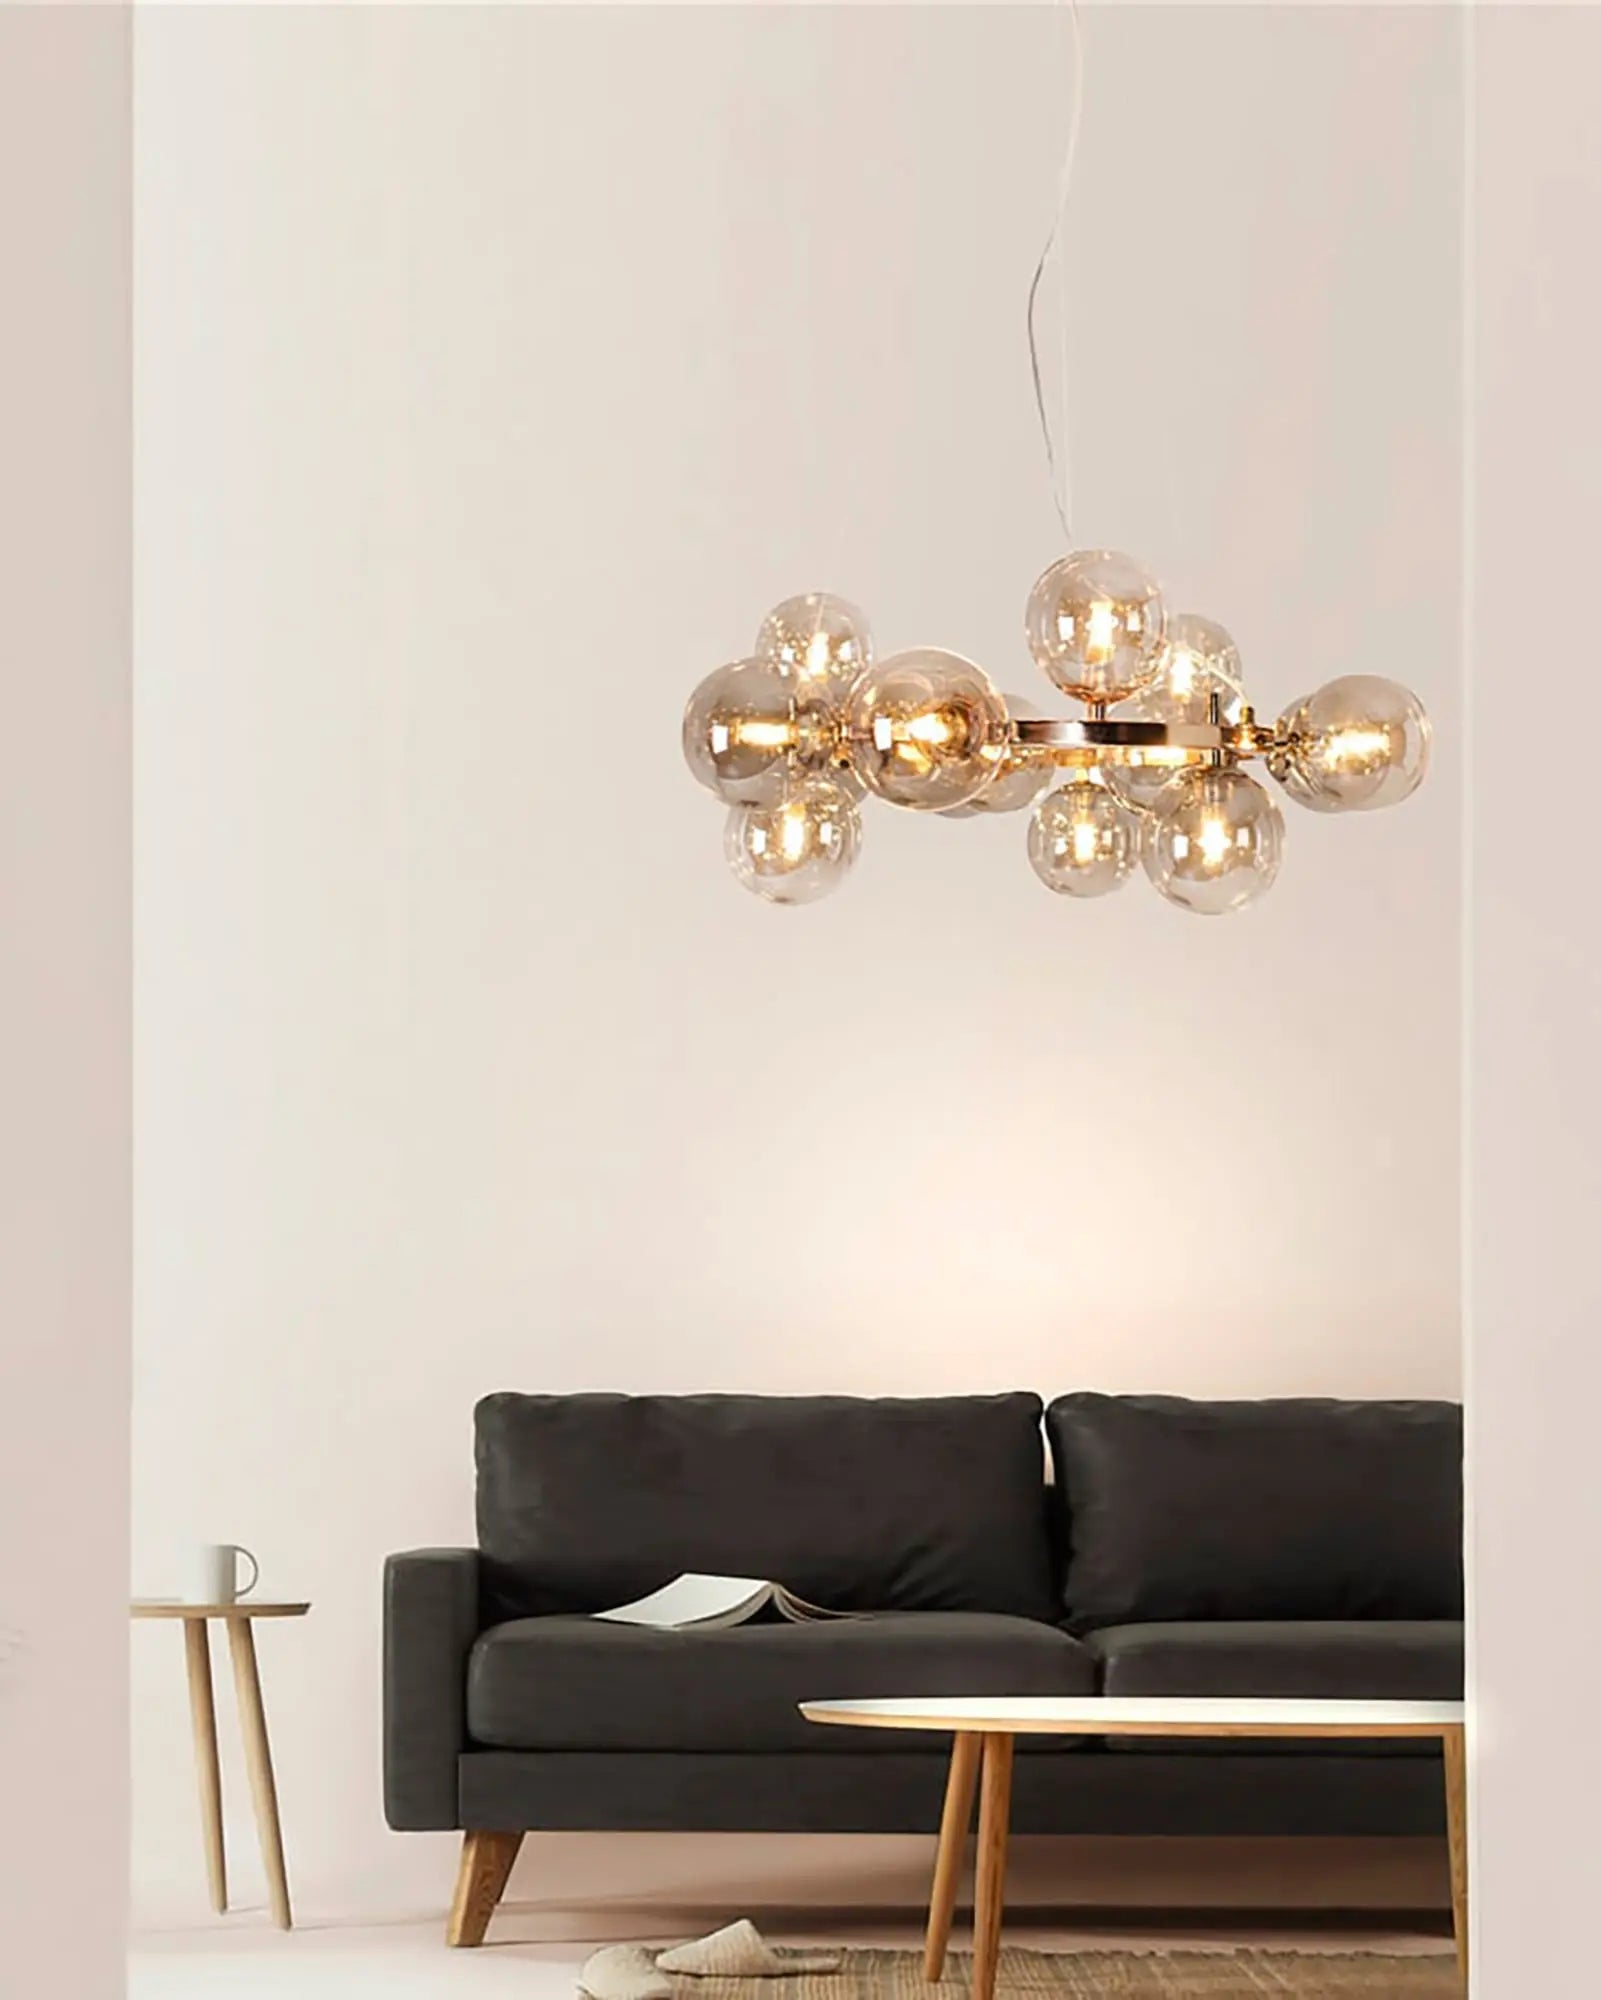 Splendor blown glass and brass modern pendant light above a coffee table